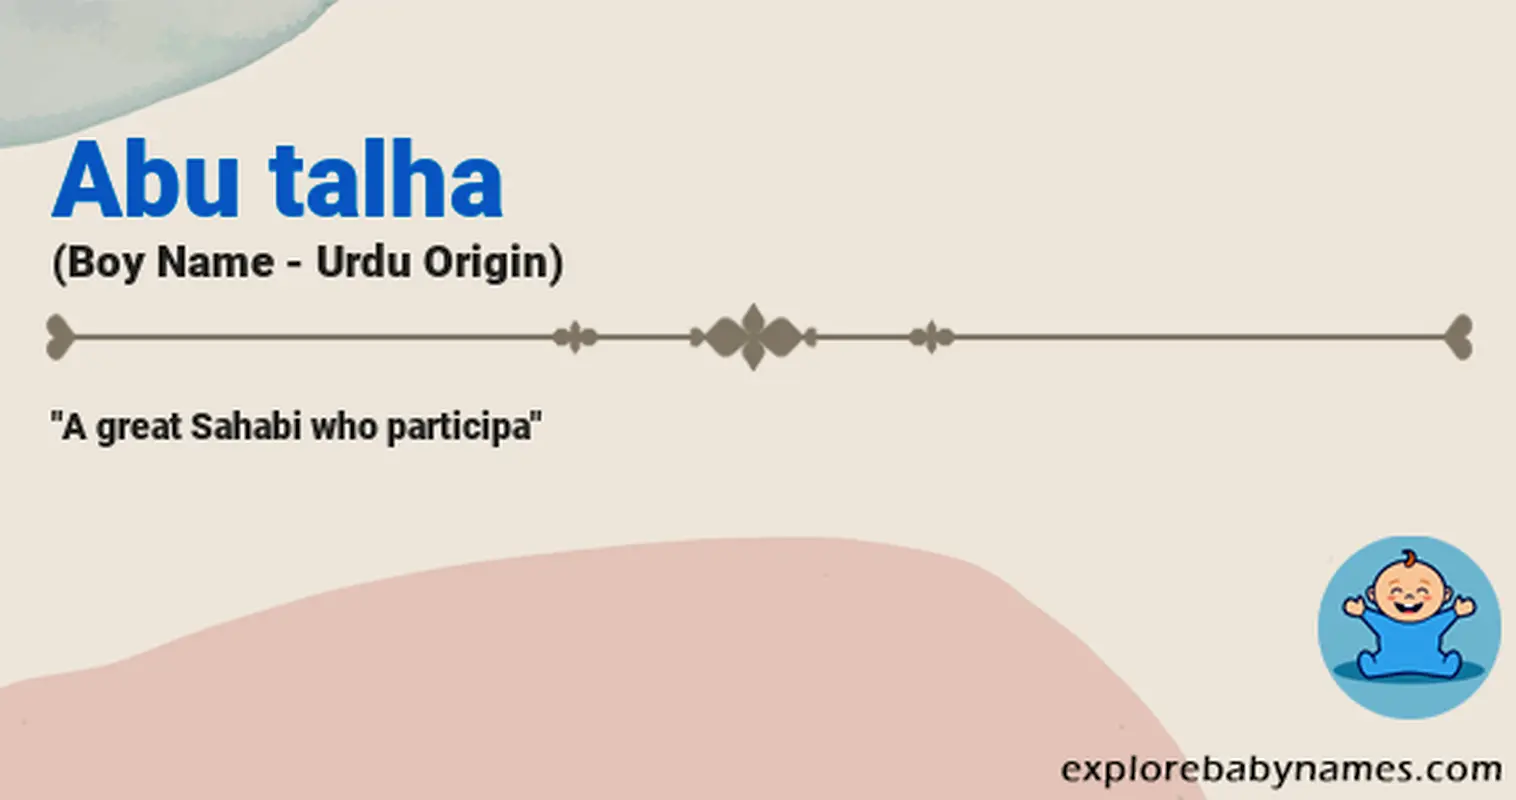 Meaning of Abu talha